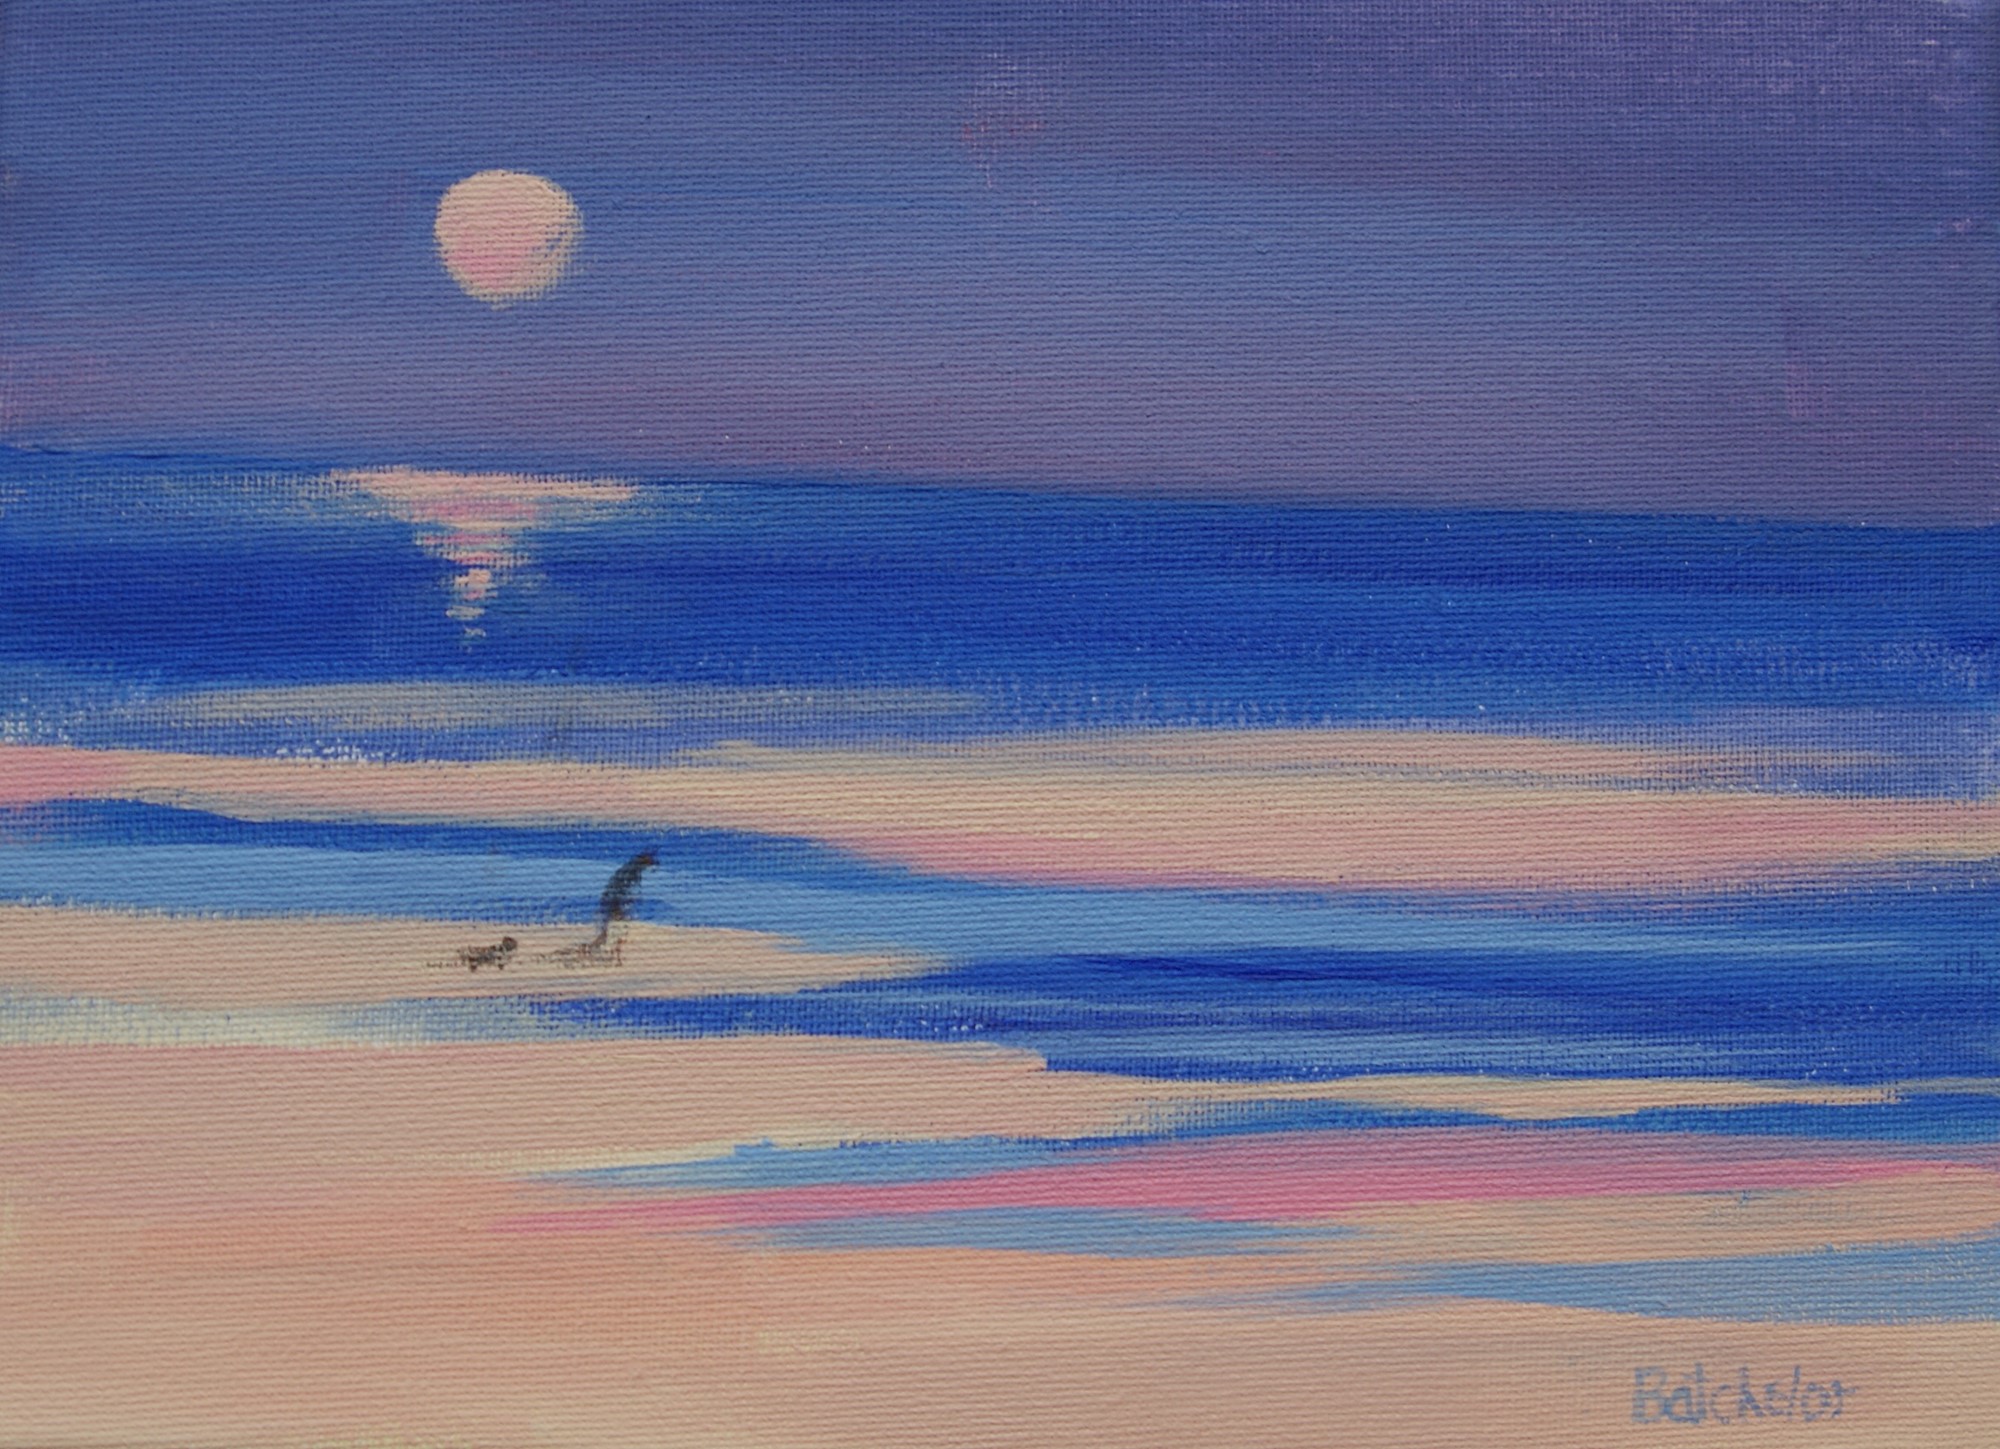 'Moonlit Beach Walk' by artist Mary Batchelor